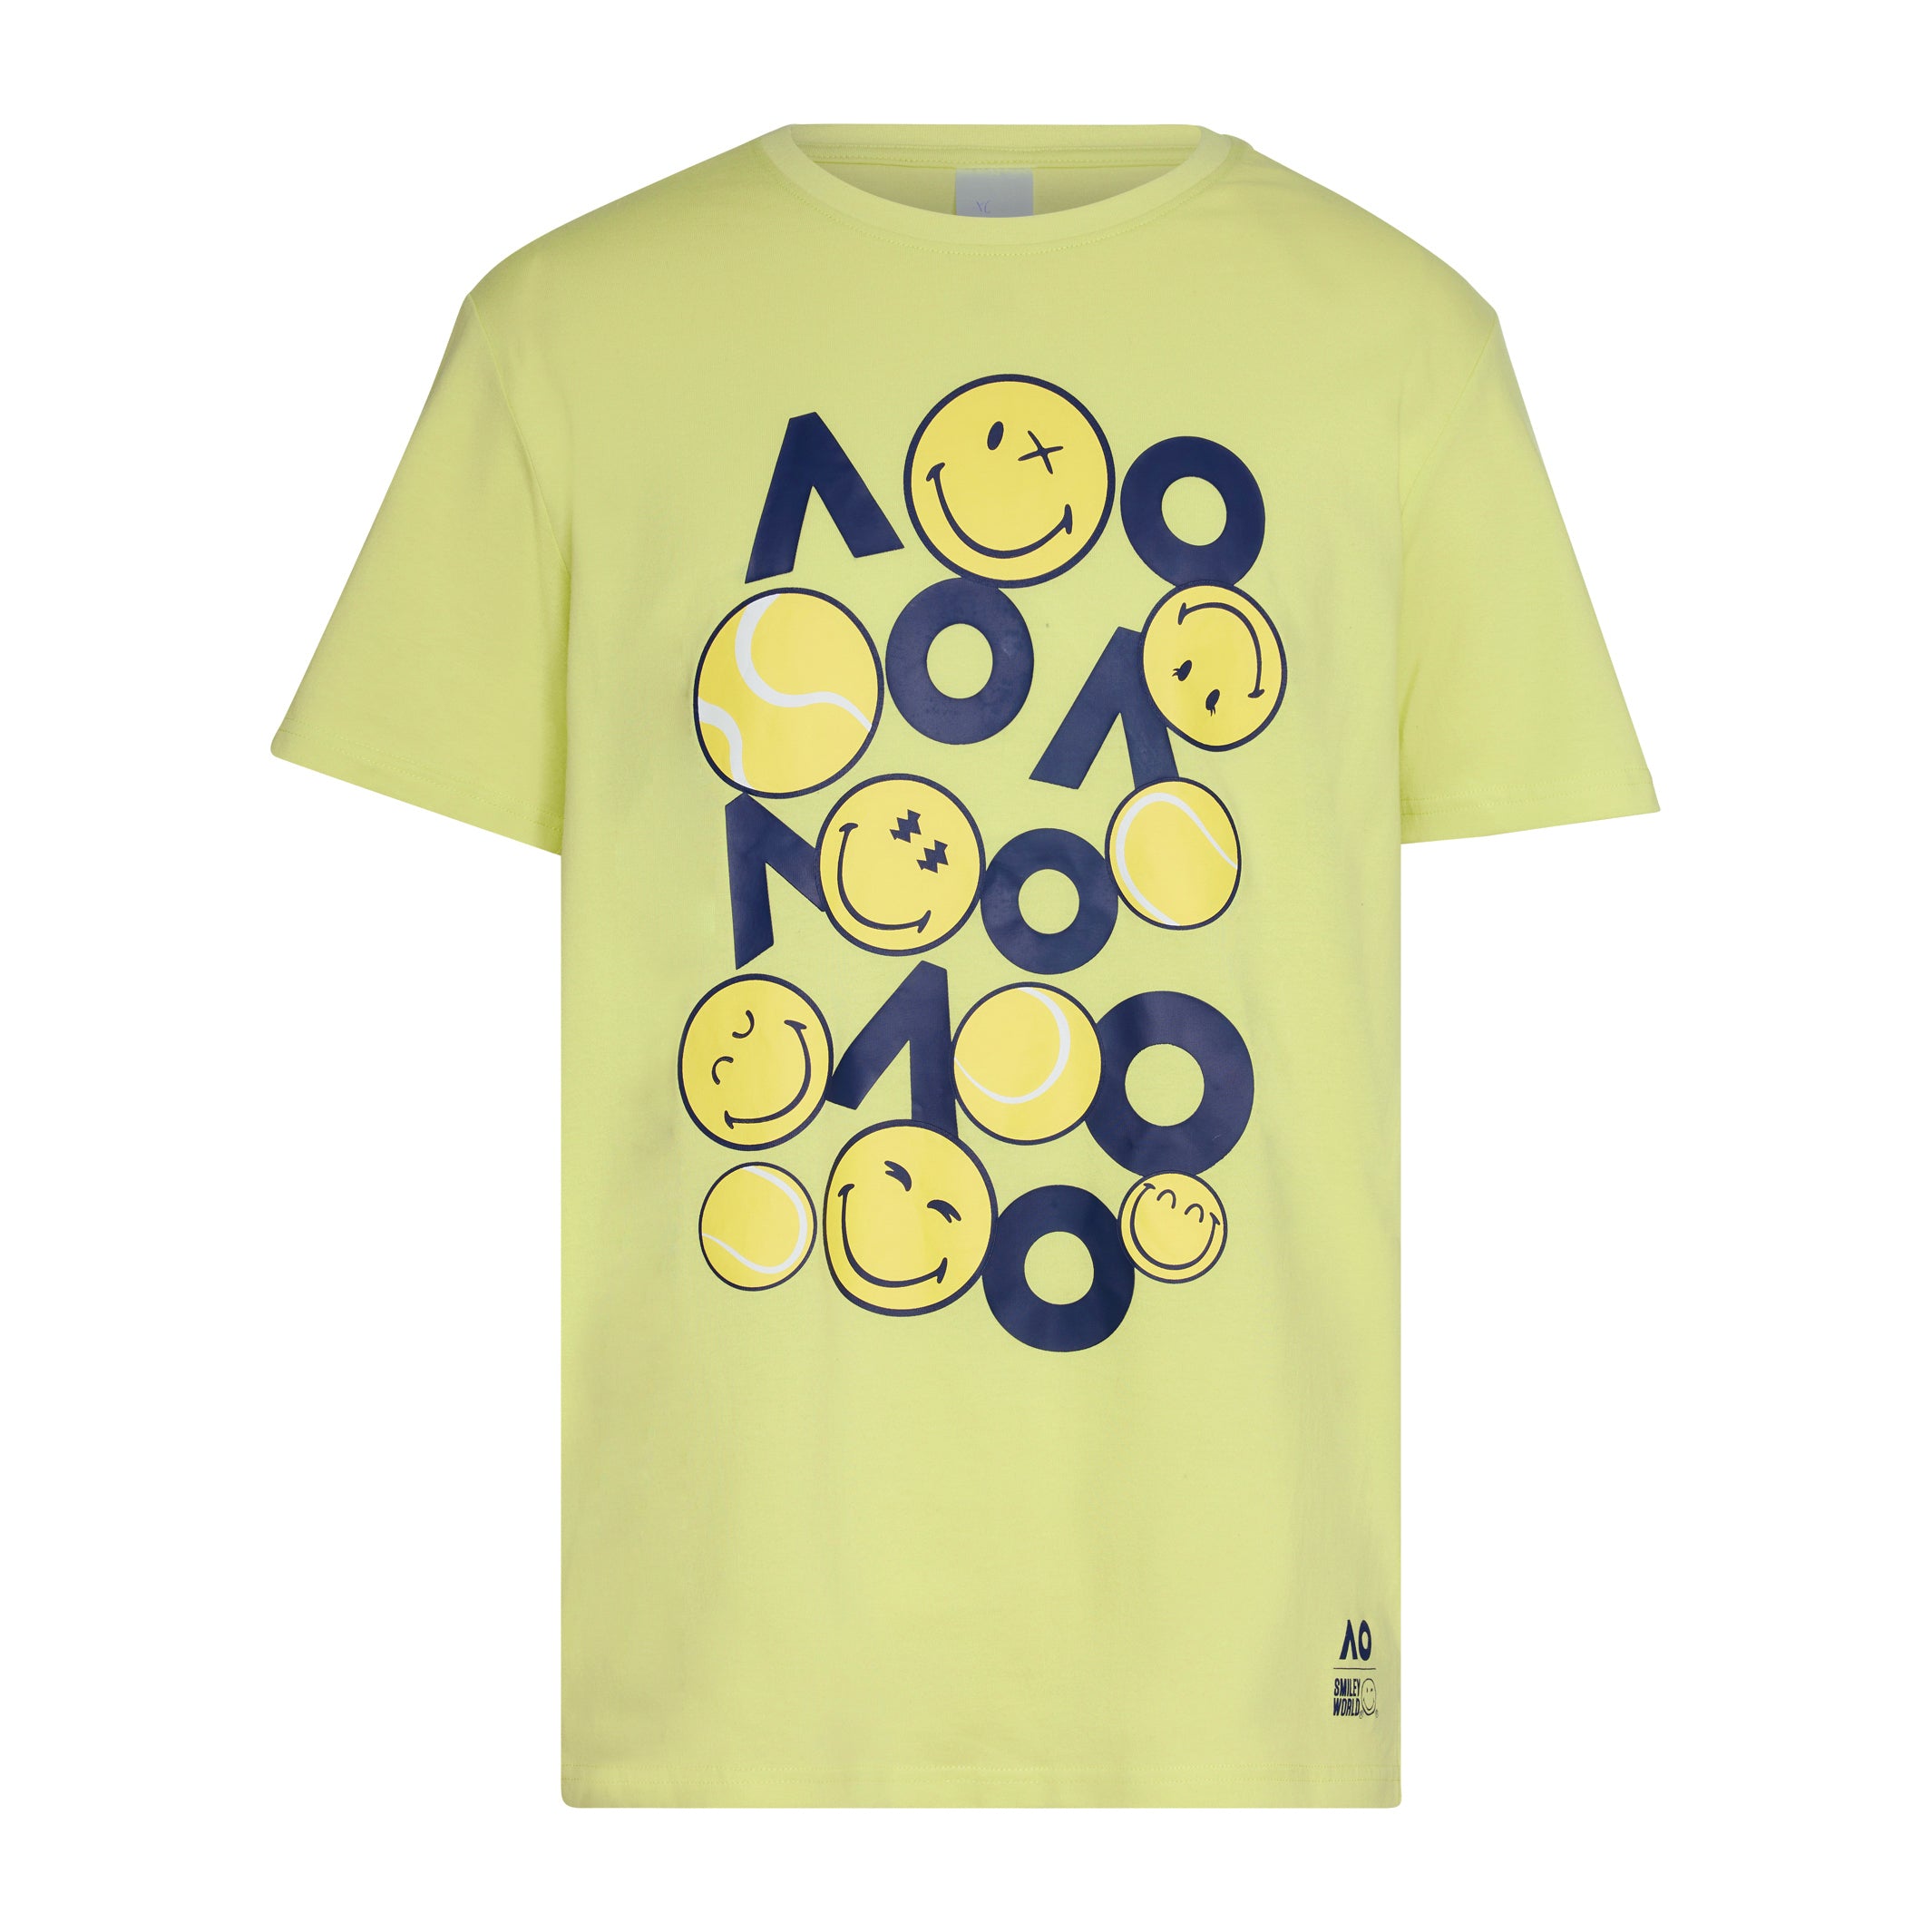 Men's T-Shirt SmileyWorld AO Tennis Balls